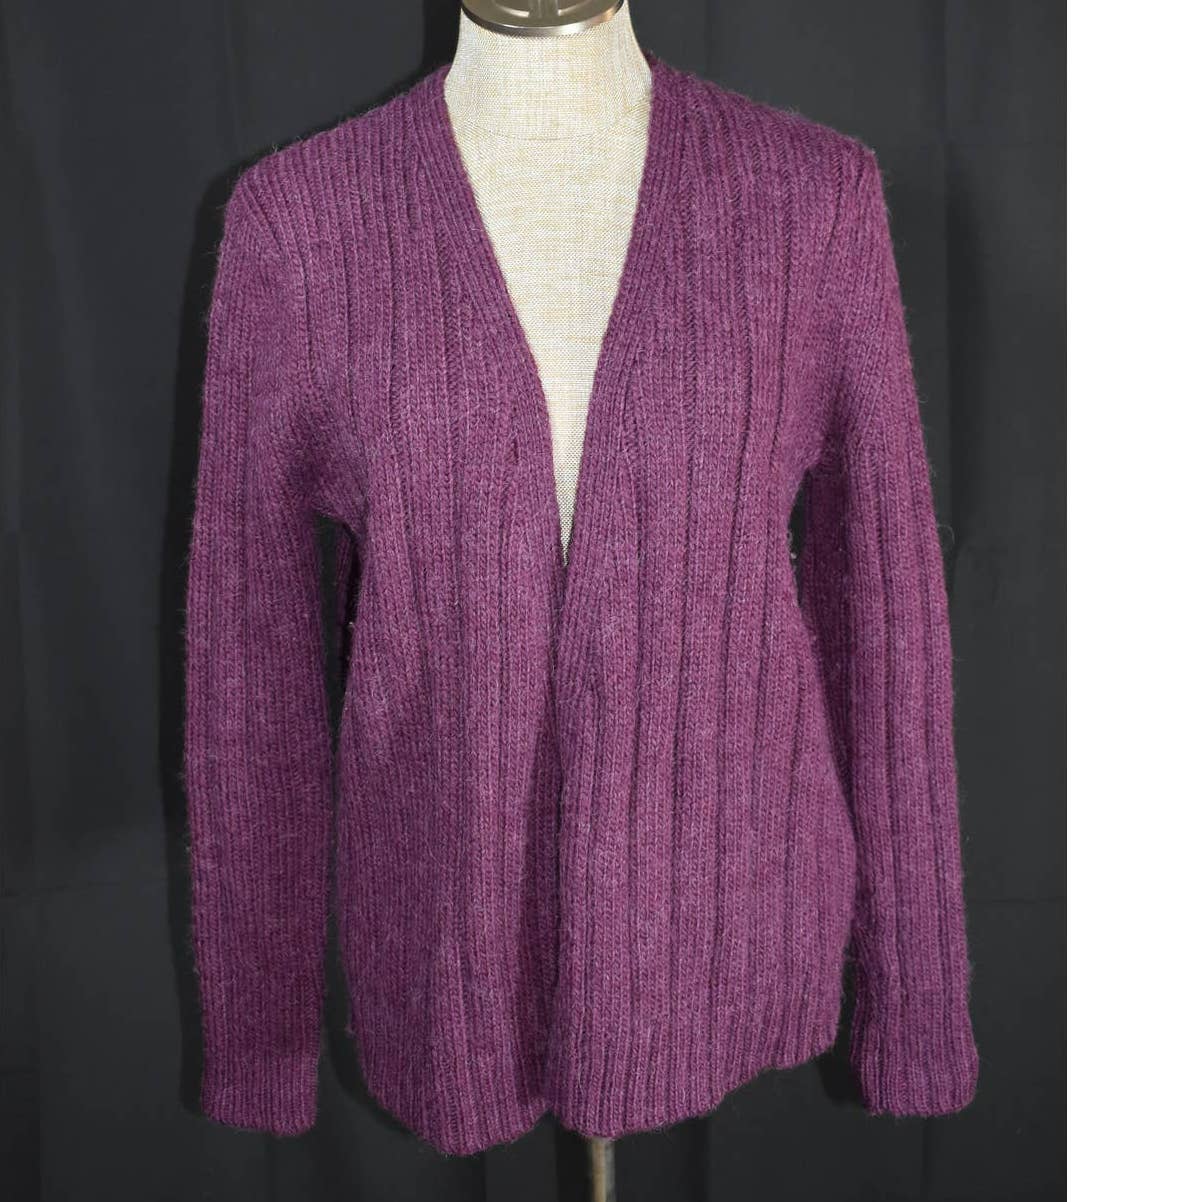 Kate Spade Saturday Purple Alpaca Wool Cardigan Sweater - S